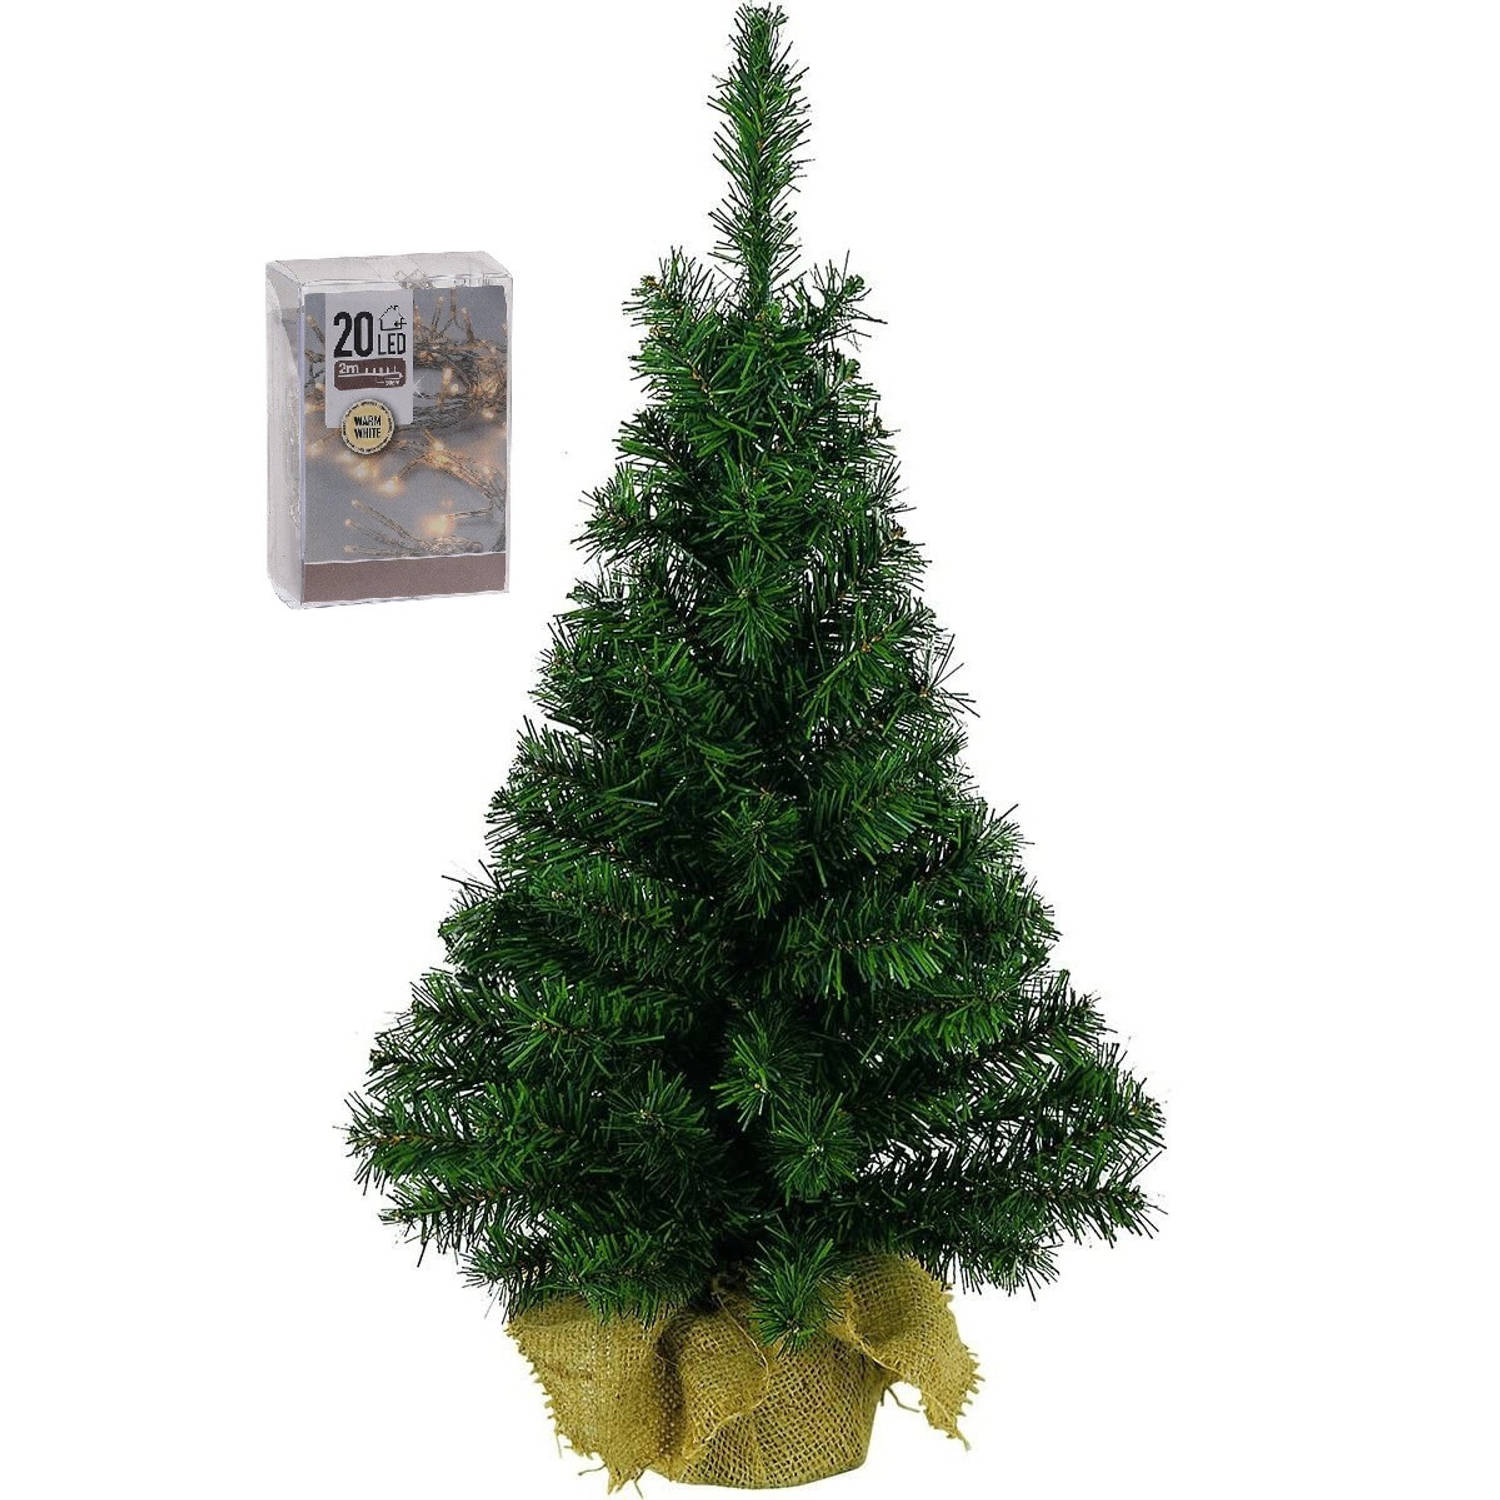 Volle Kunst Kerstboom 45 Cm In Jute Zak Inclusief 20 Warm Witte Lampjes Kunstkerstboom